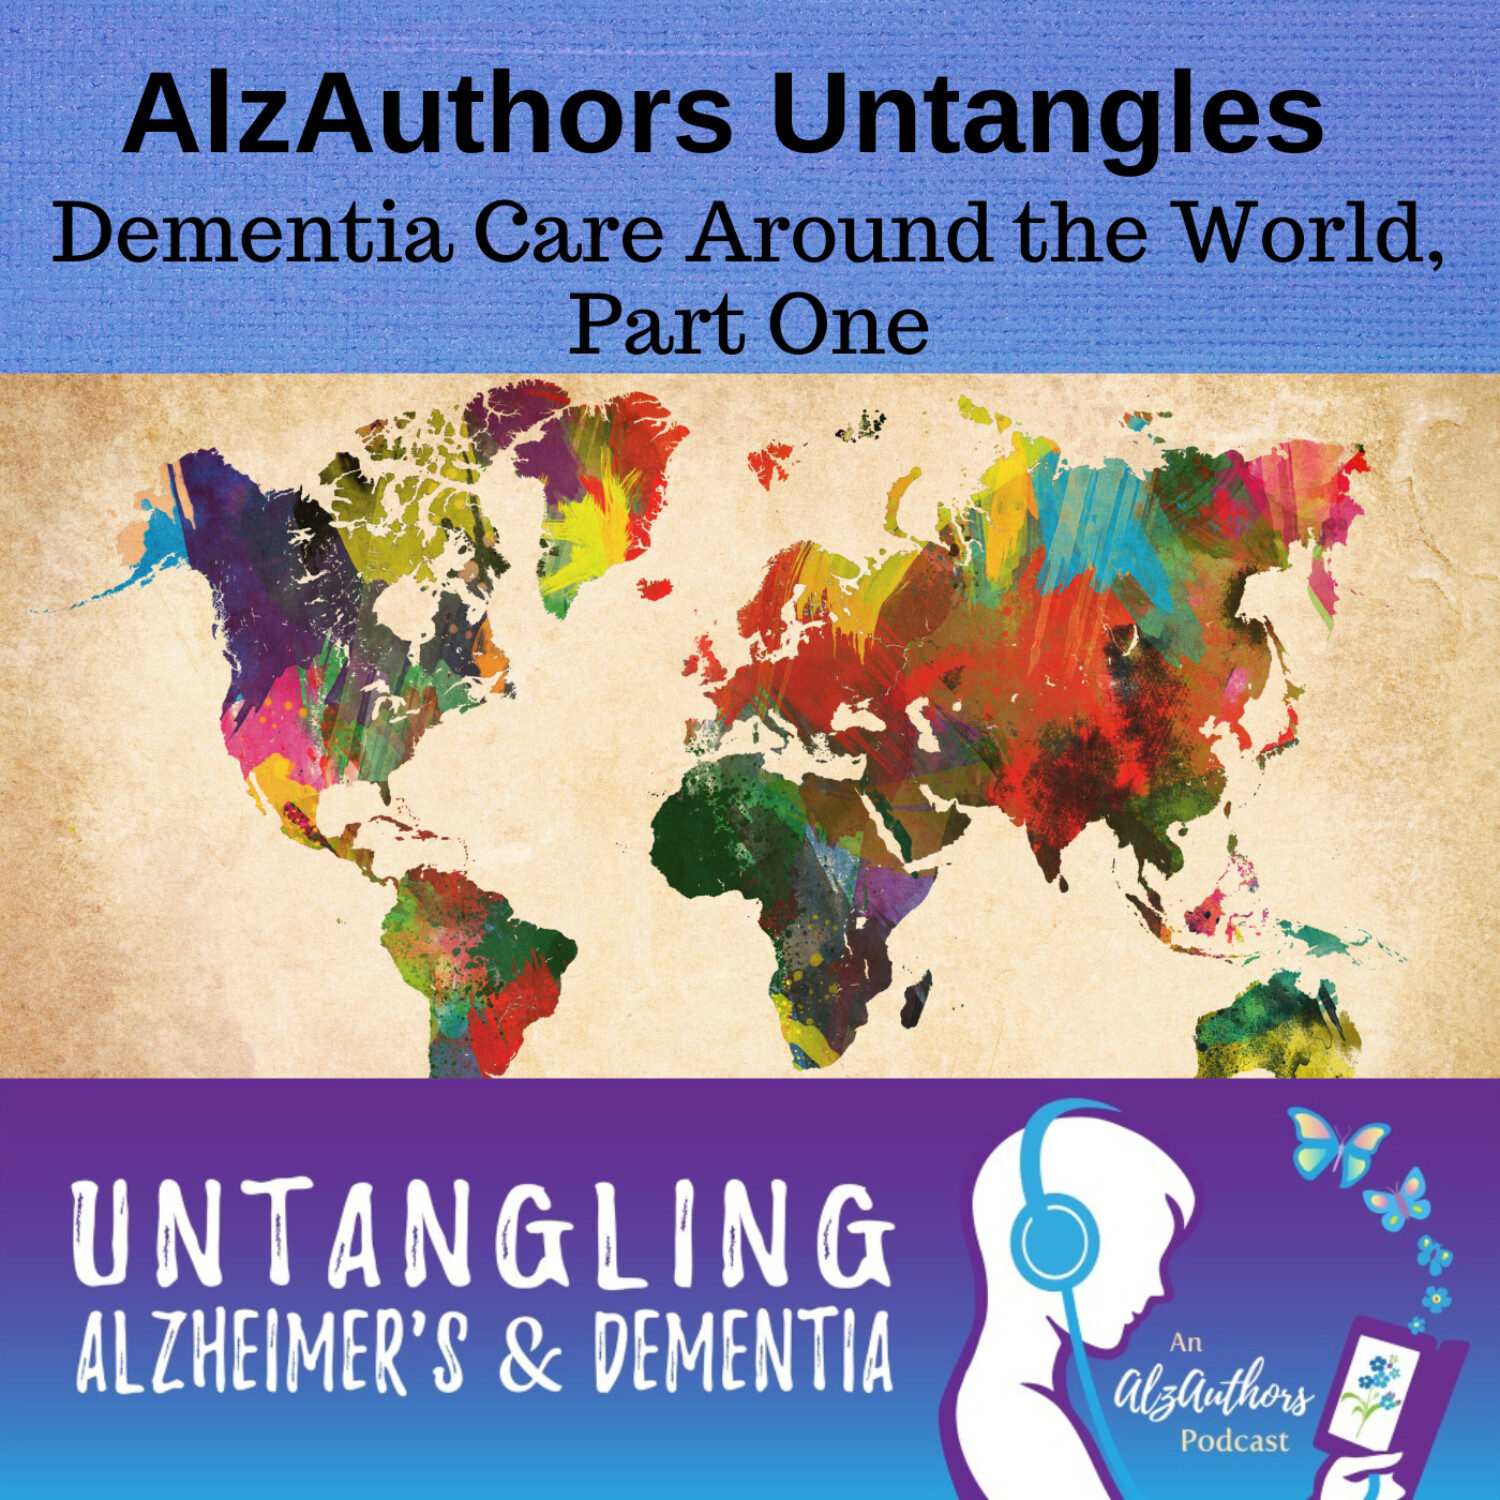 Dementia Care Around the World, Part One